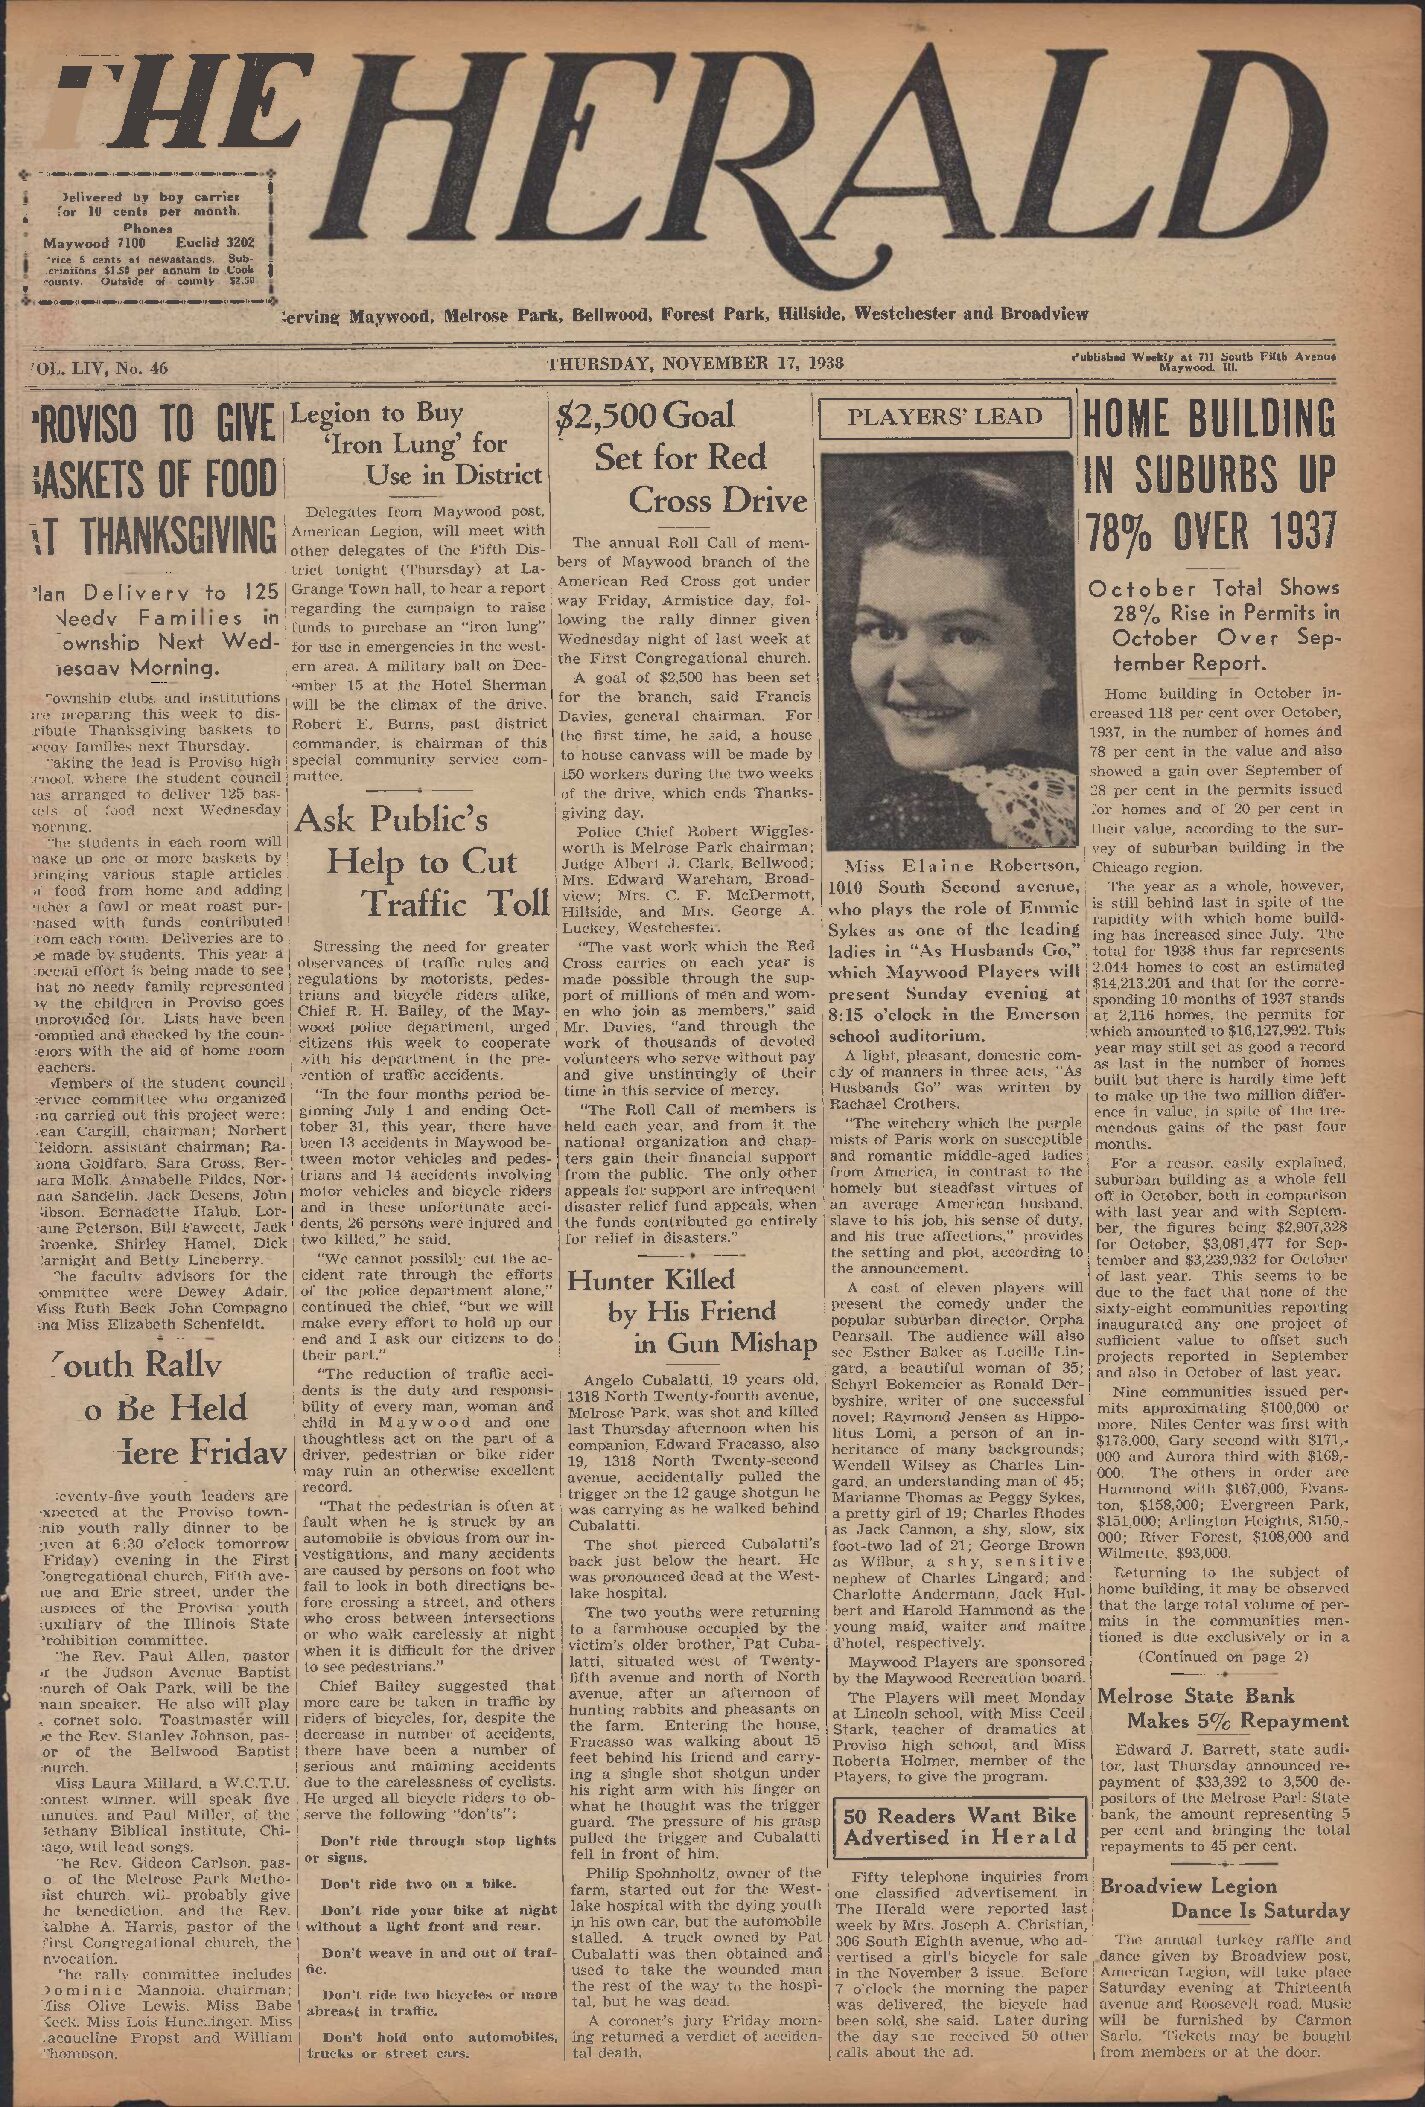 The Herald – 19381117